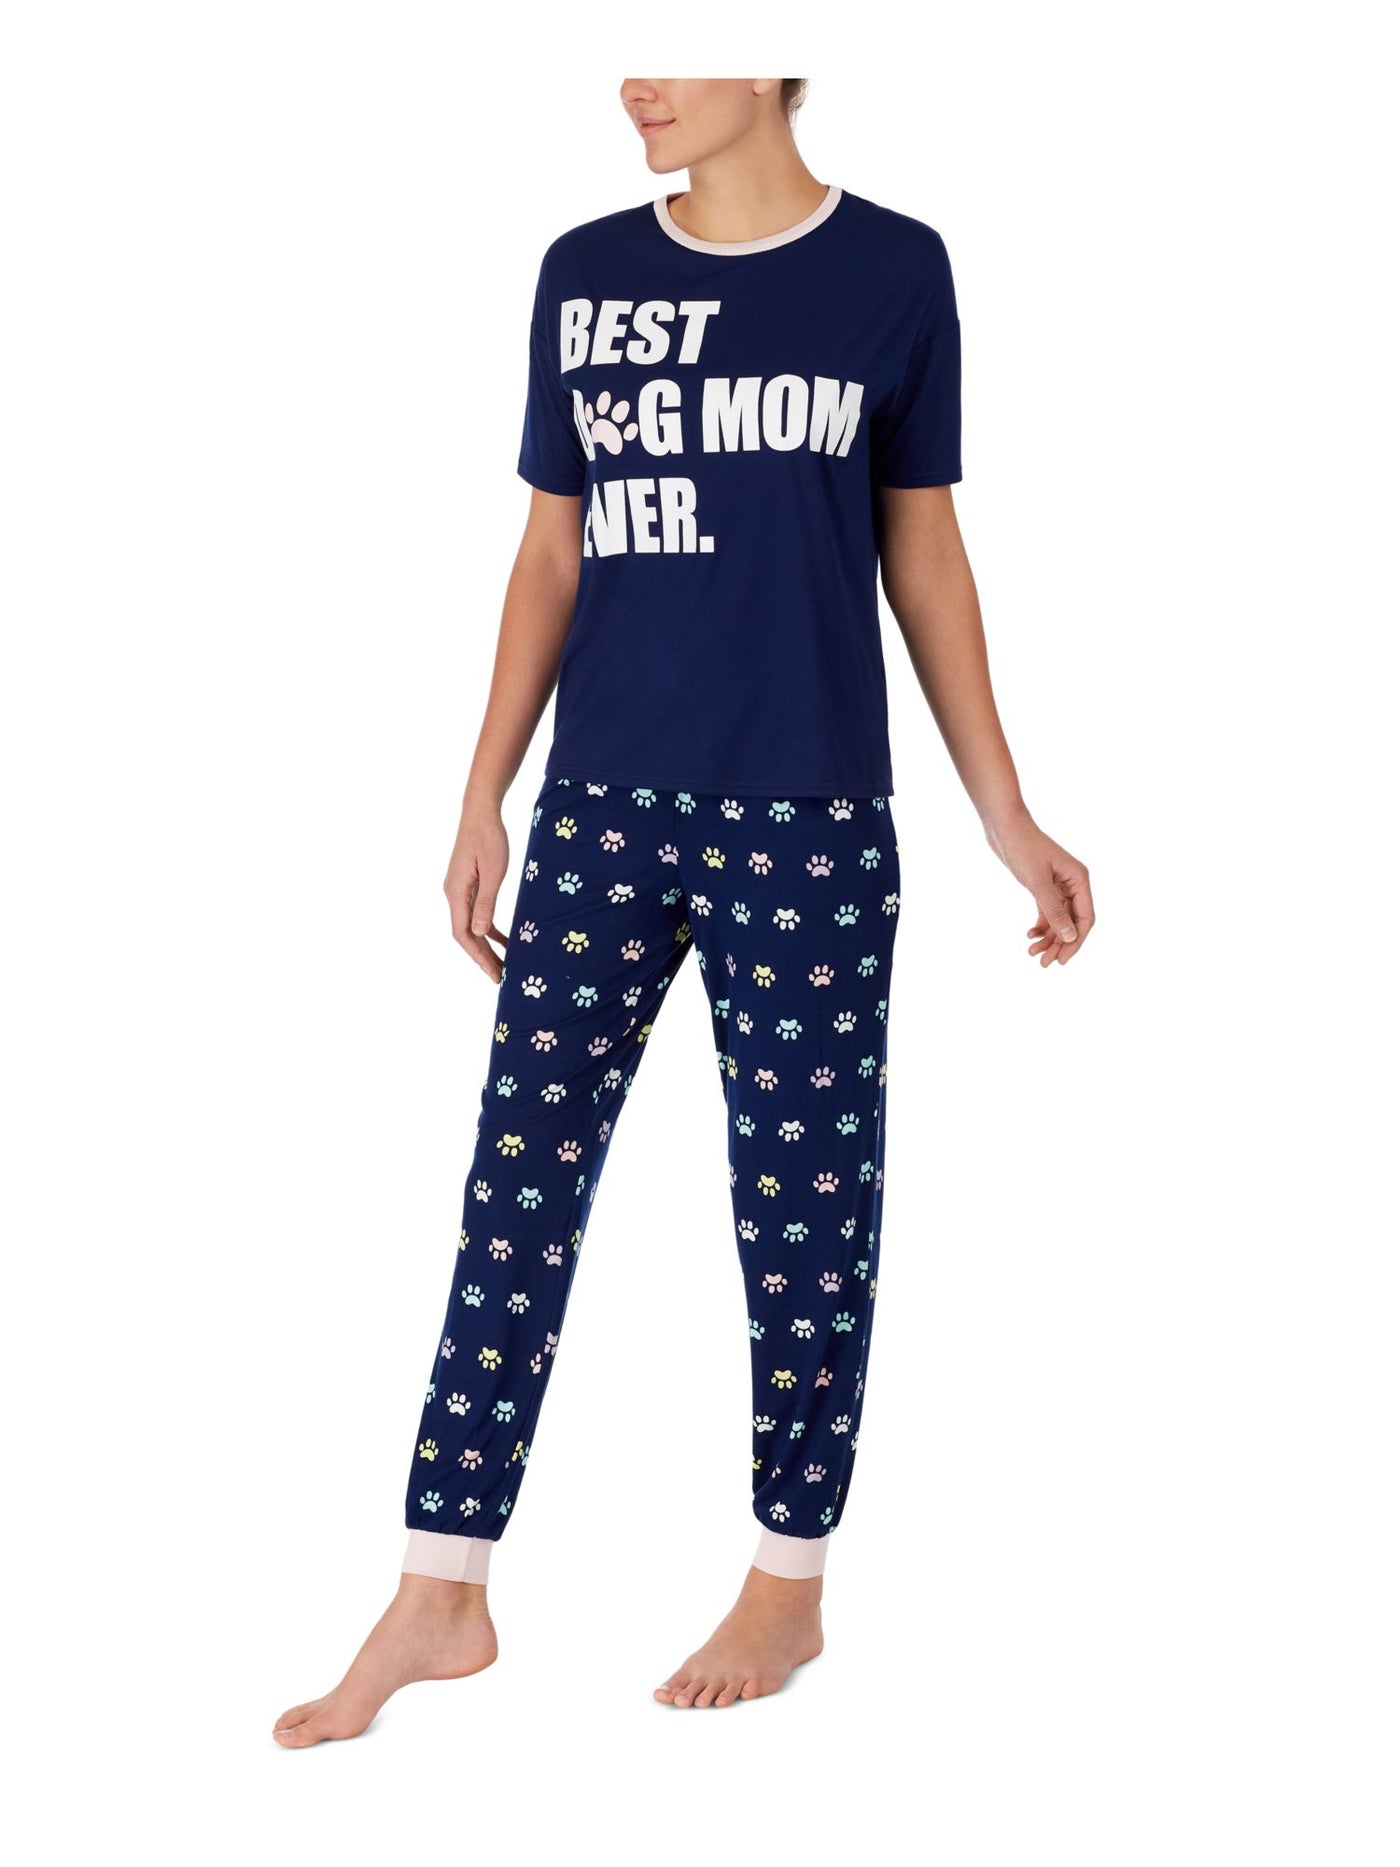 FRENCH JENNY Womens Dog Mom Navy Graphic Drawstring Short Sleeve T-Shirt Top Cuffed Pants Pajamas M